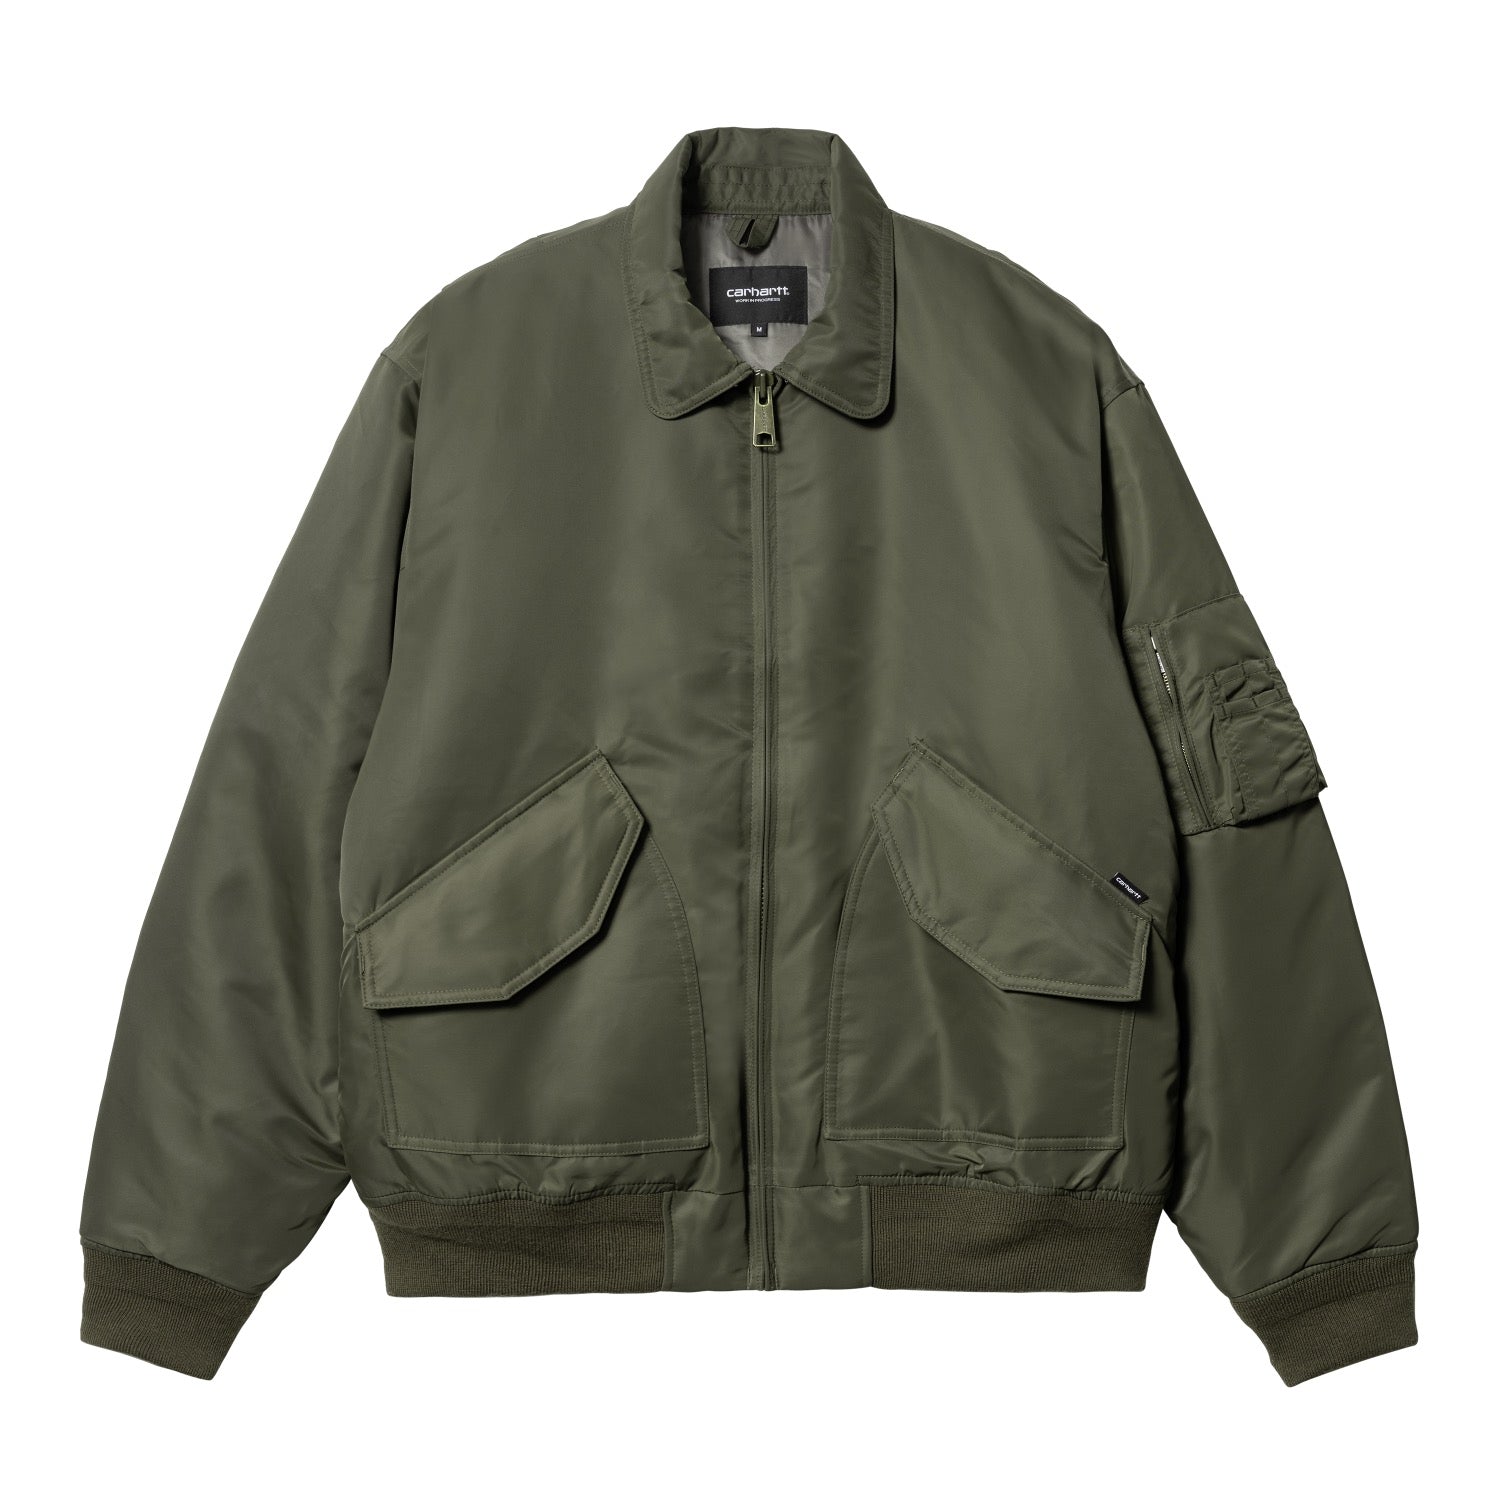 Carhartt wip Aviator jacket (フライトジャケット)フライトジャケット 